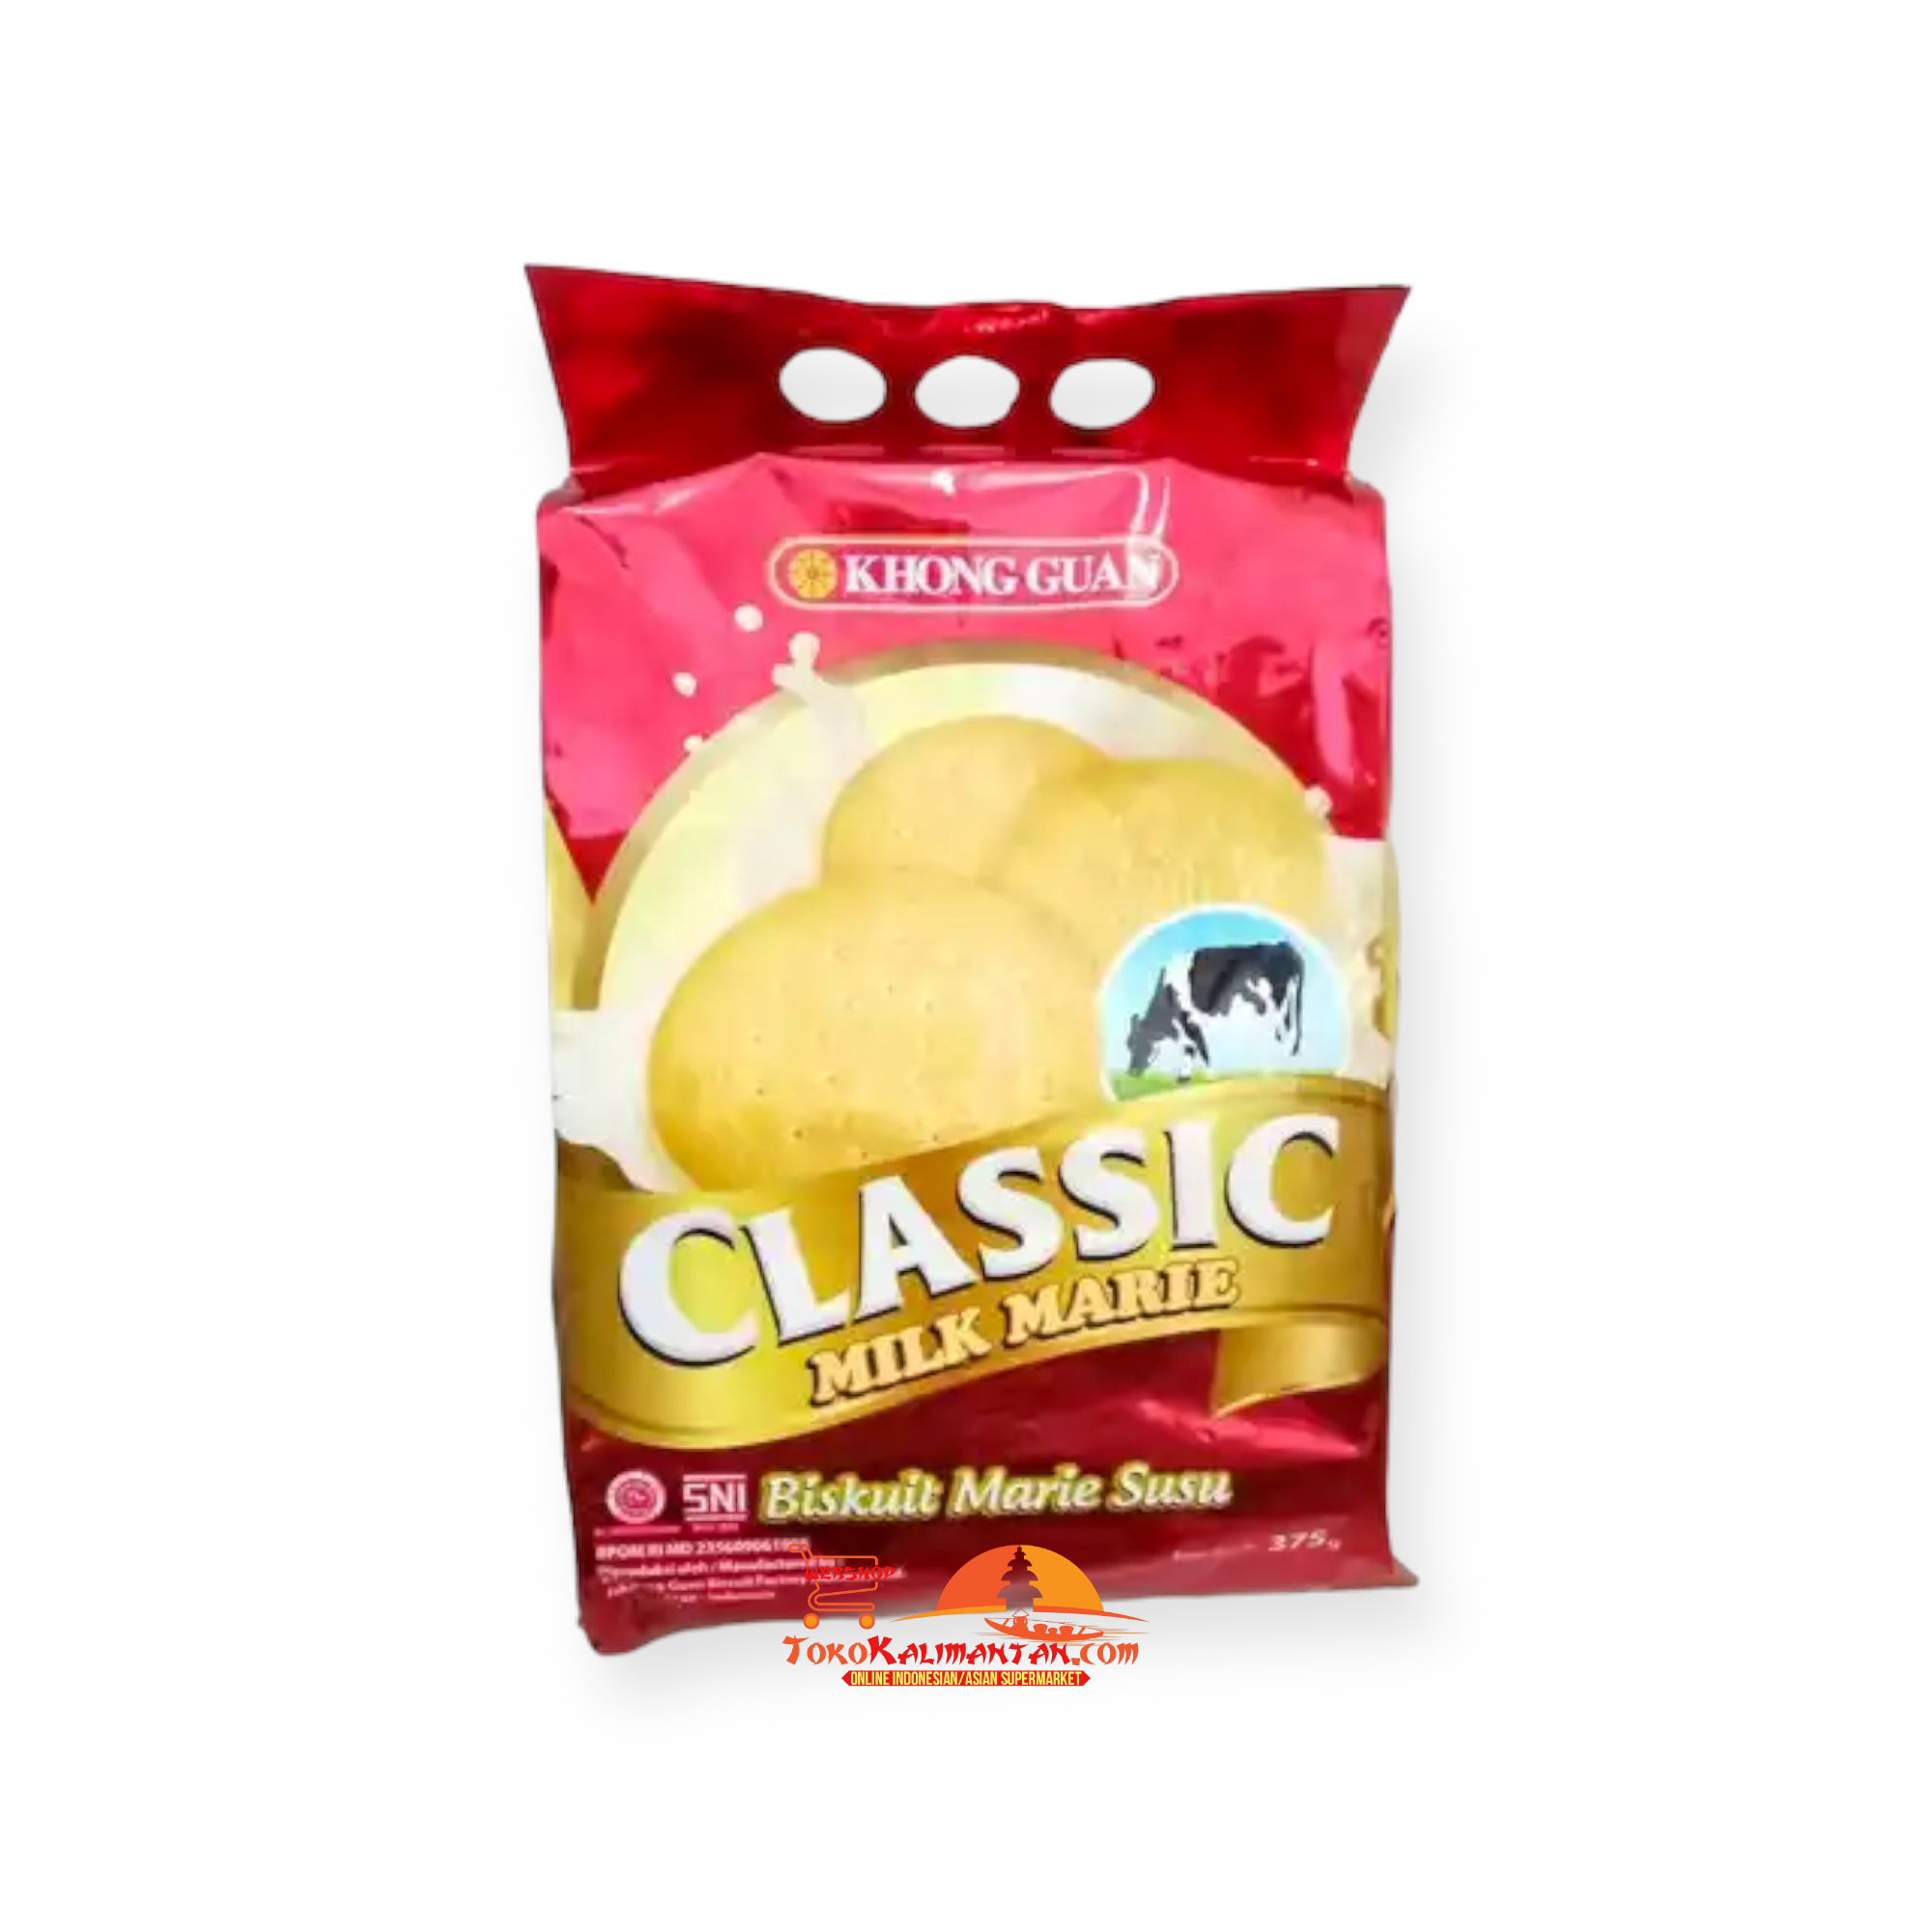 khong guan Khong guan - Classic Milk Marie 375